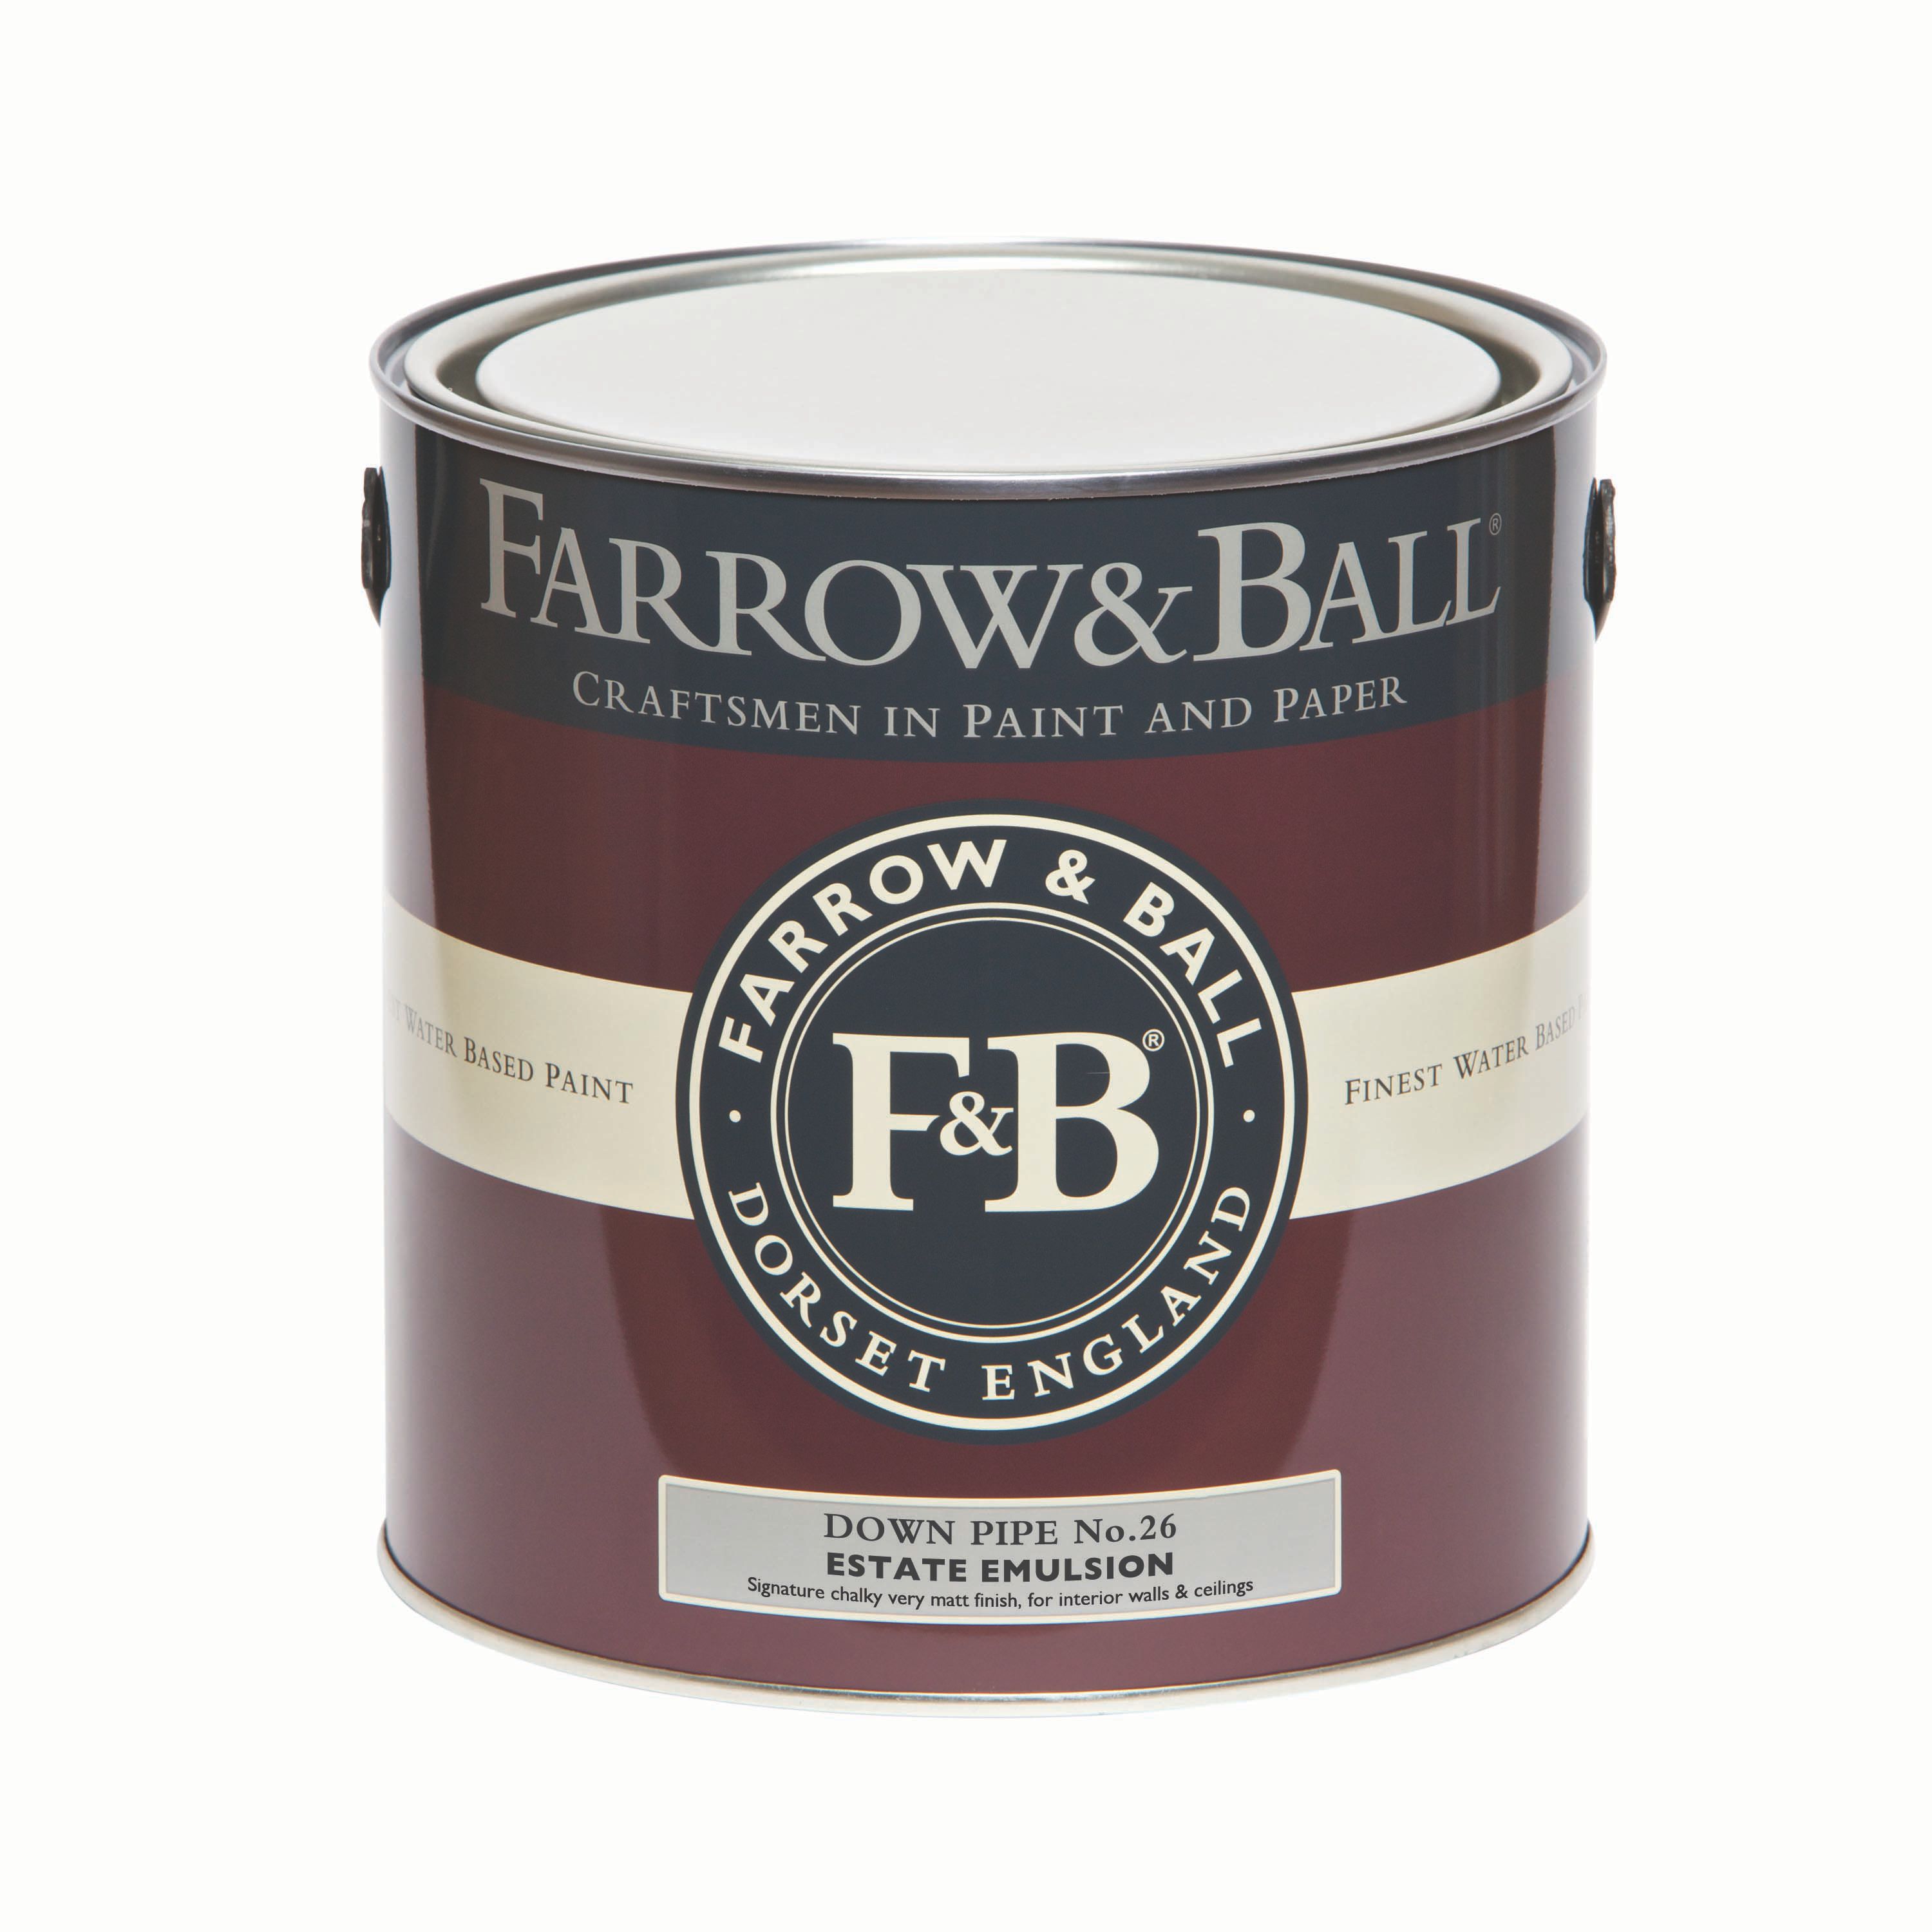 Farrow & Ball Estate Down pipe No.26 Matt Emulsion paint, 2.5L